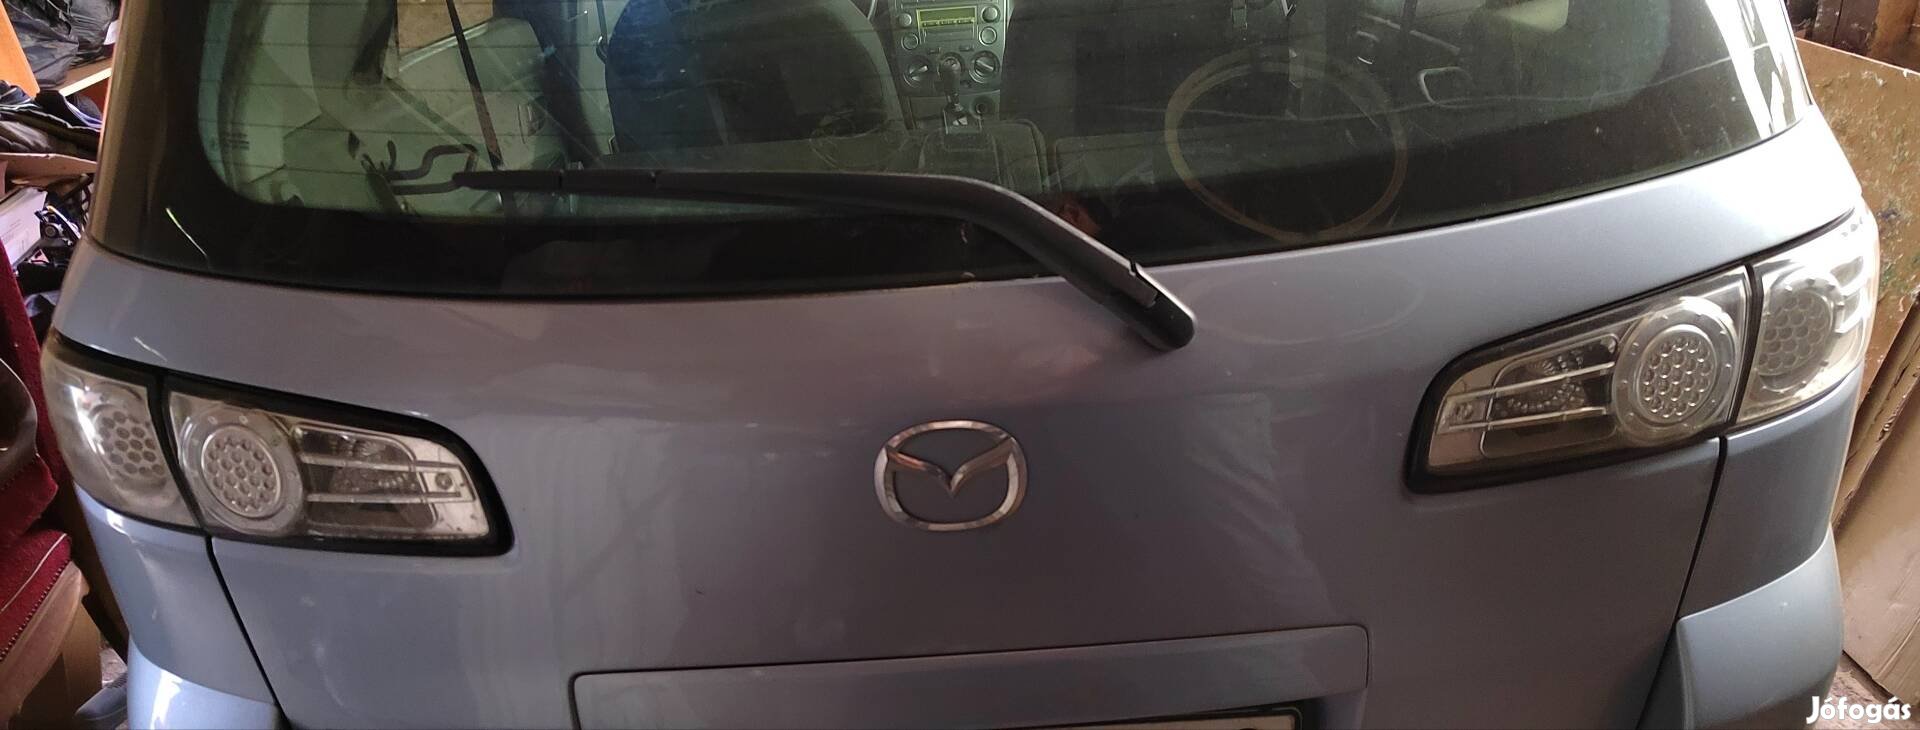 Mazda 2 hátsó lámpa